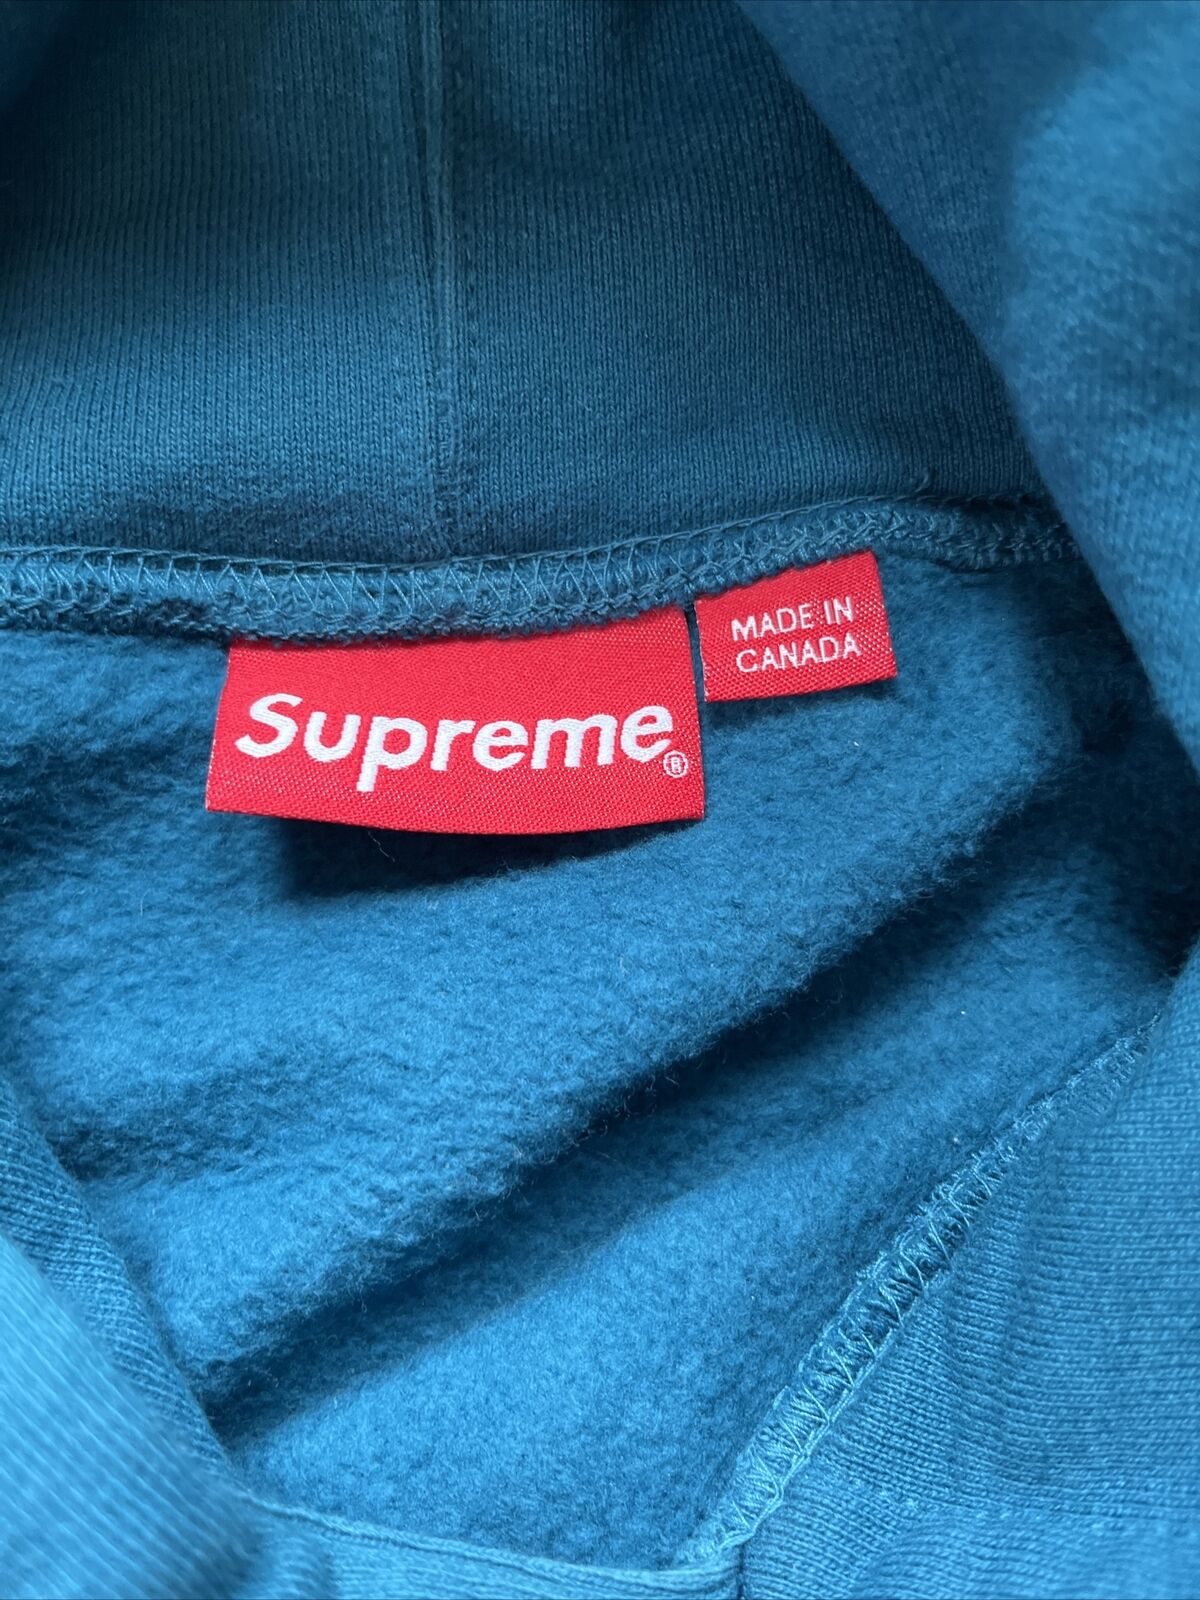 Supreme stop crying hooded sweatshirt size large | eBay